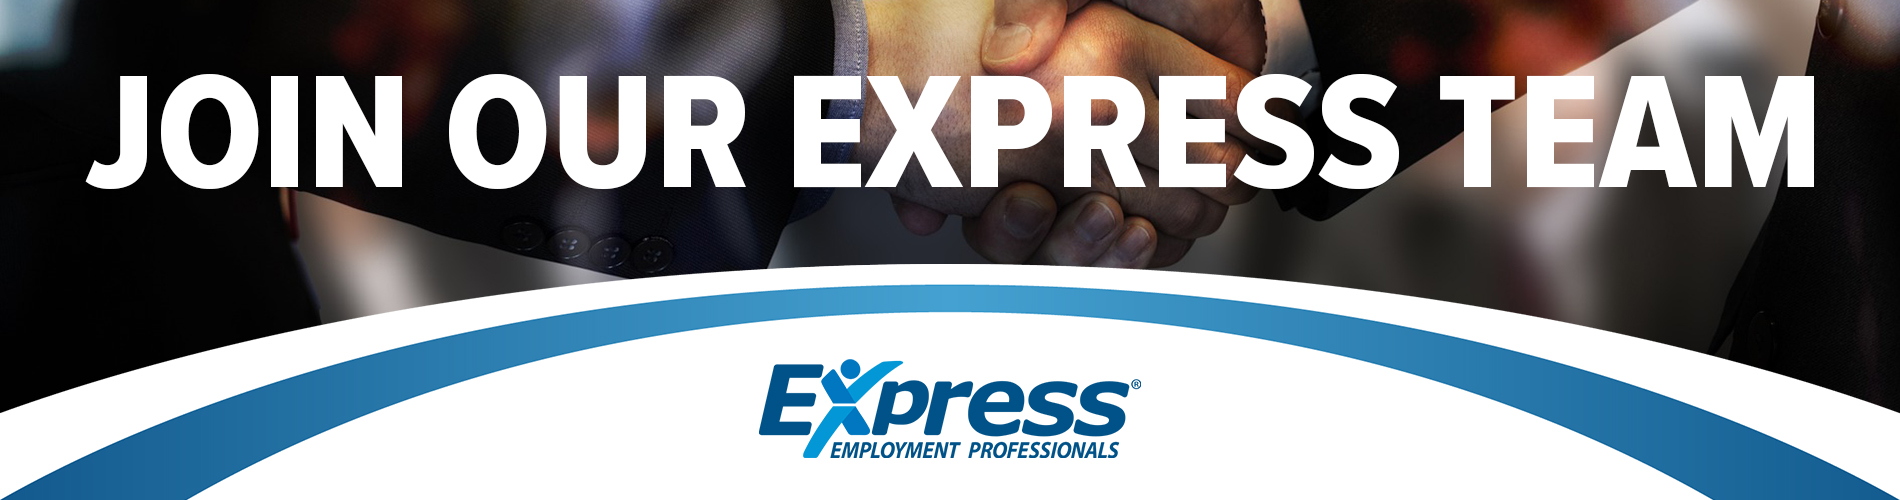 Join Our Express Team, Danville-Paris-Watseka Staffing Jobs